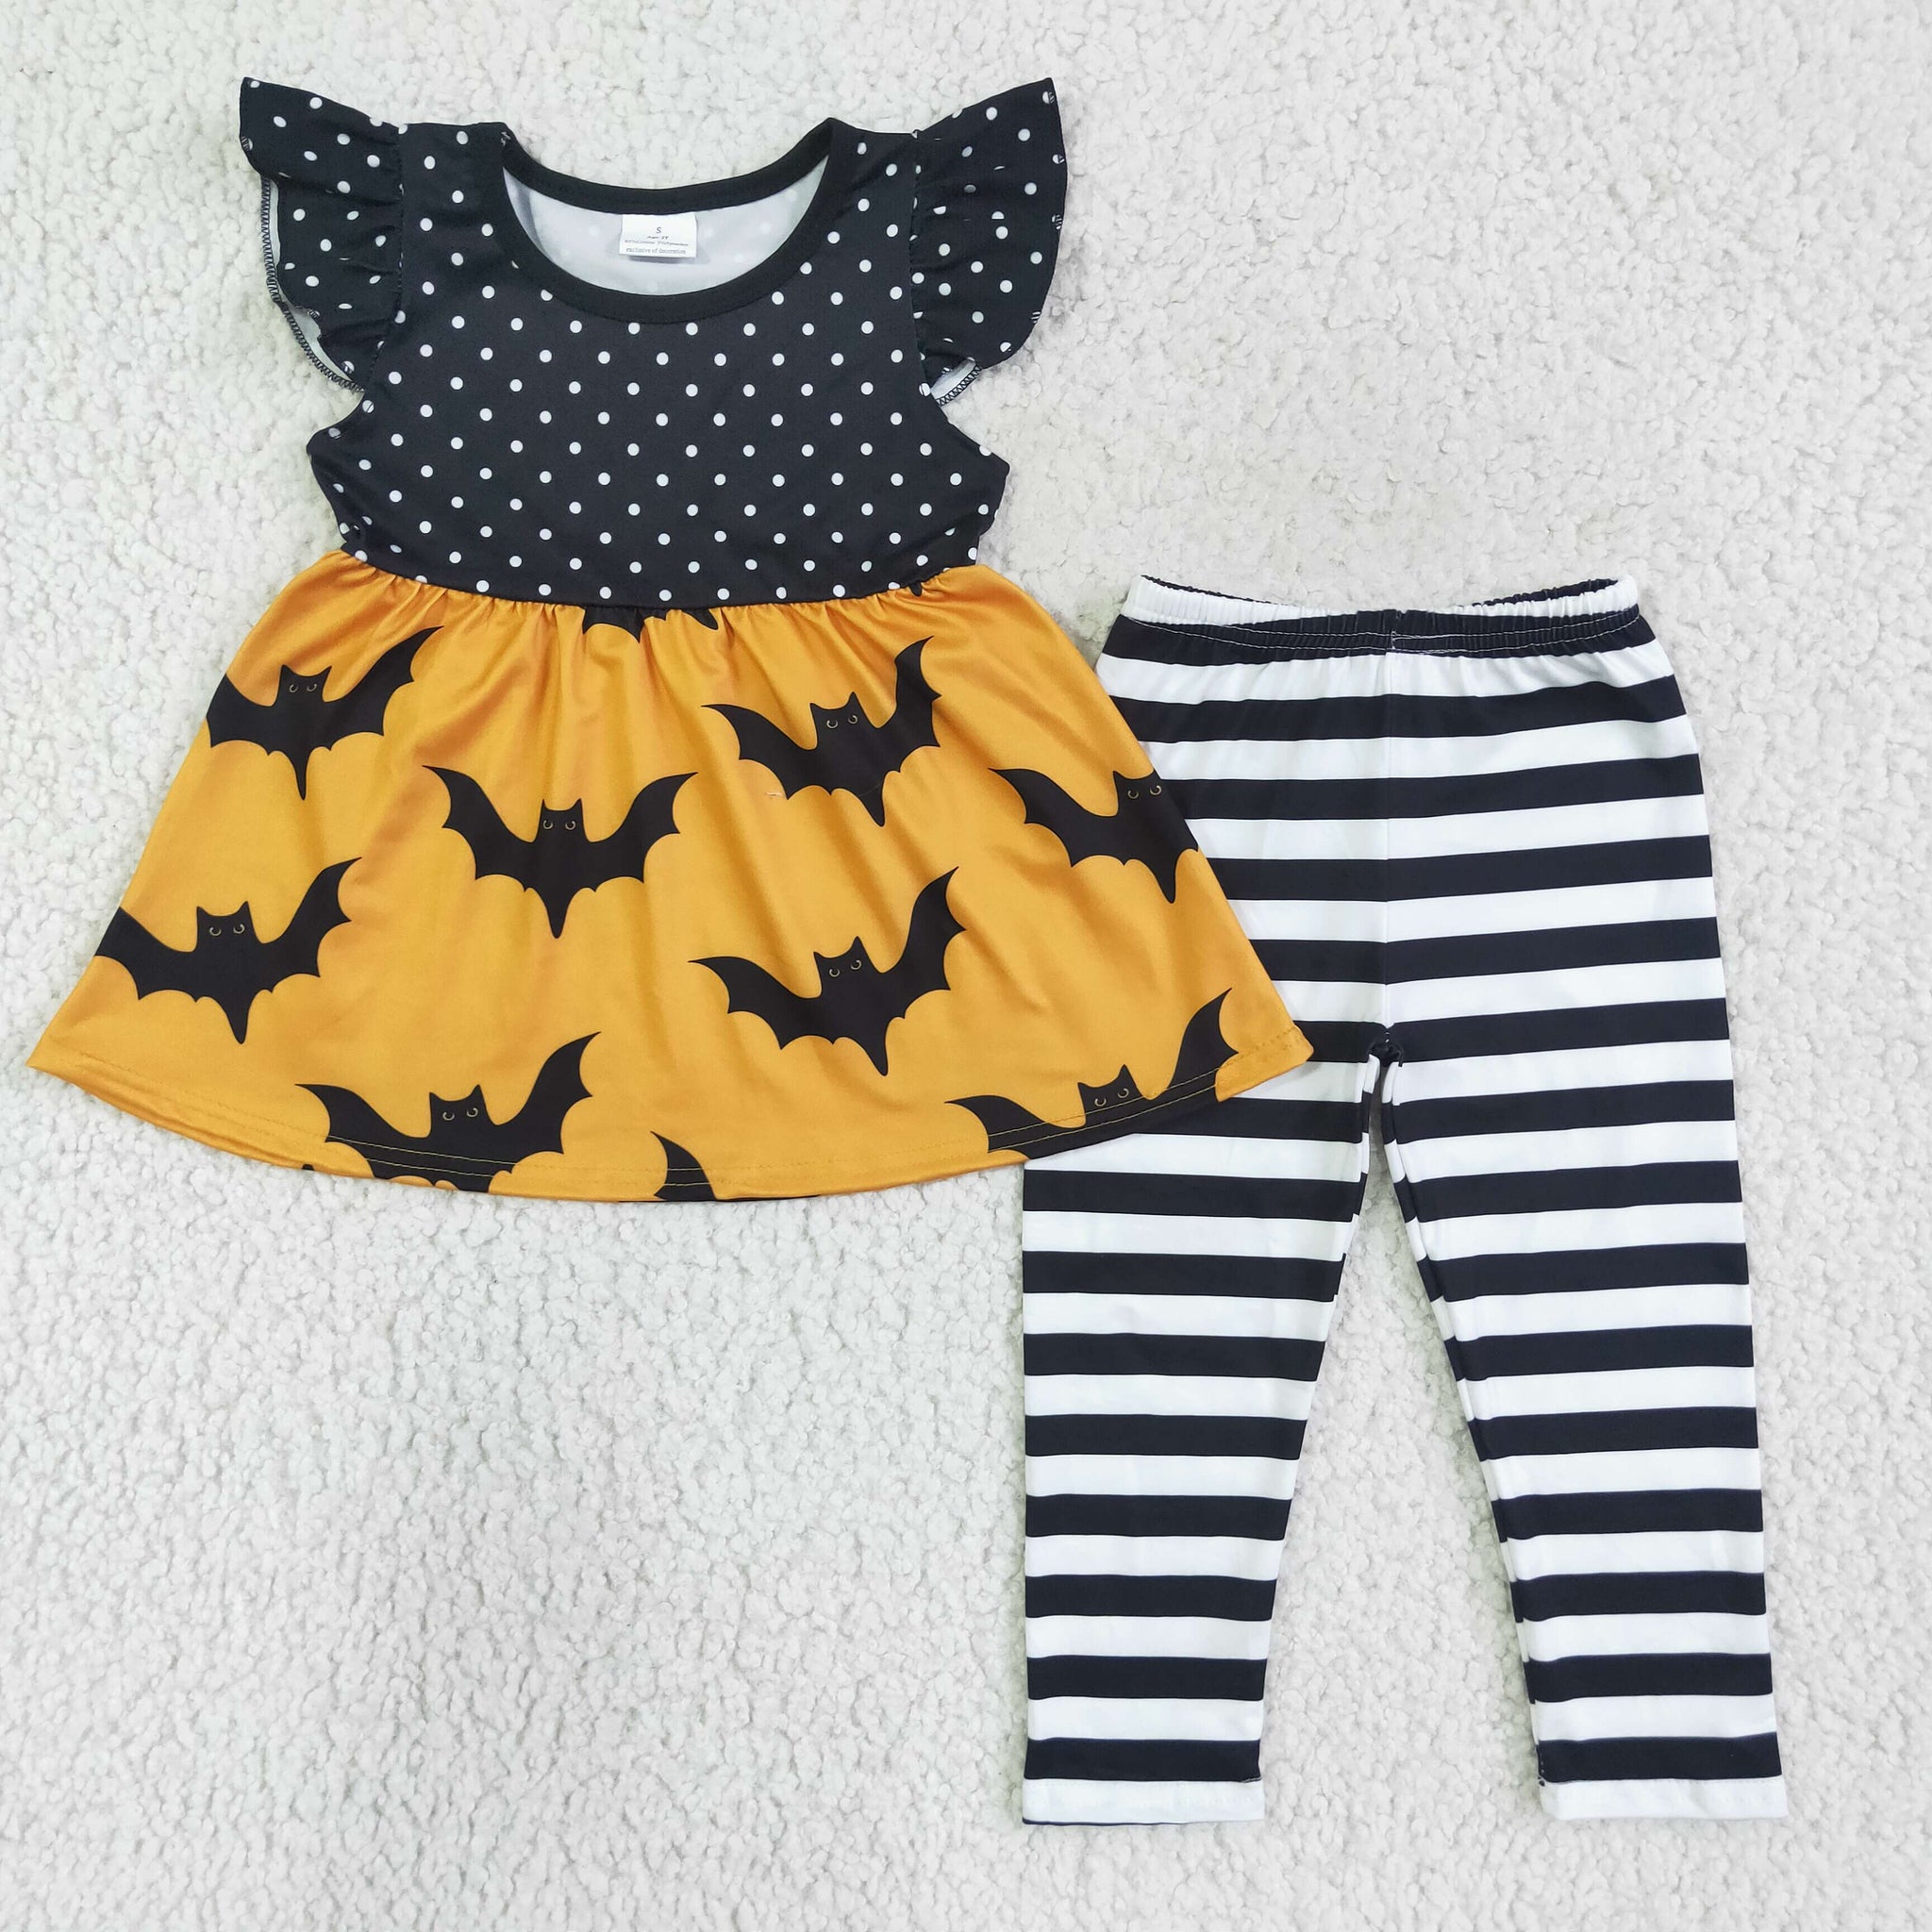 GSPO0171 baby halloween costume teens girl clothing